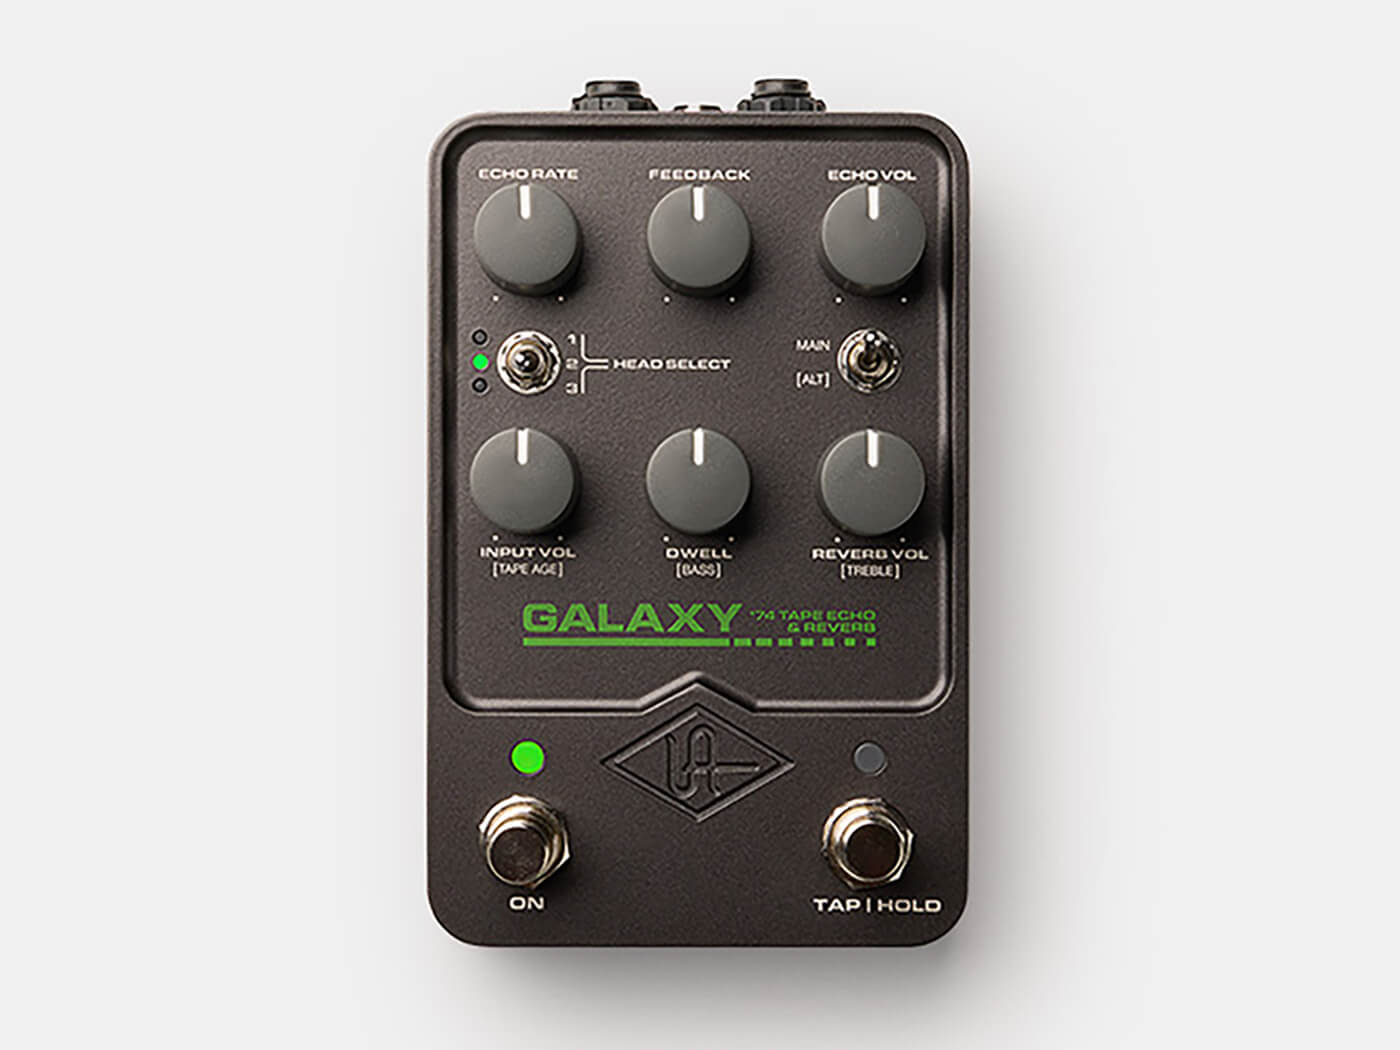 Universal Audio's Galaxy '74